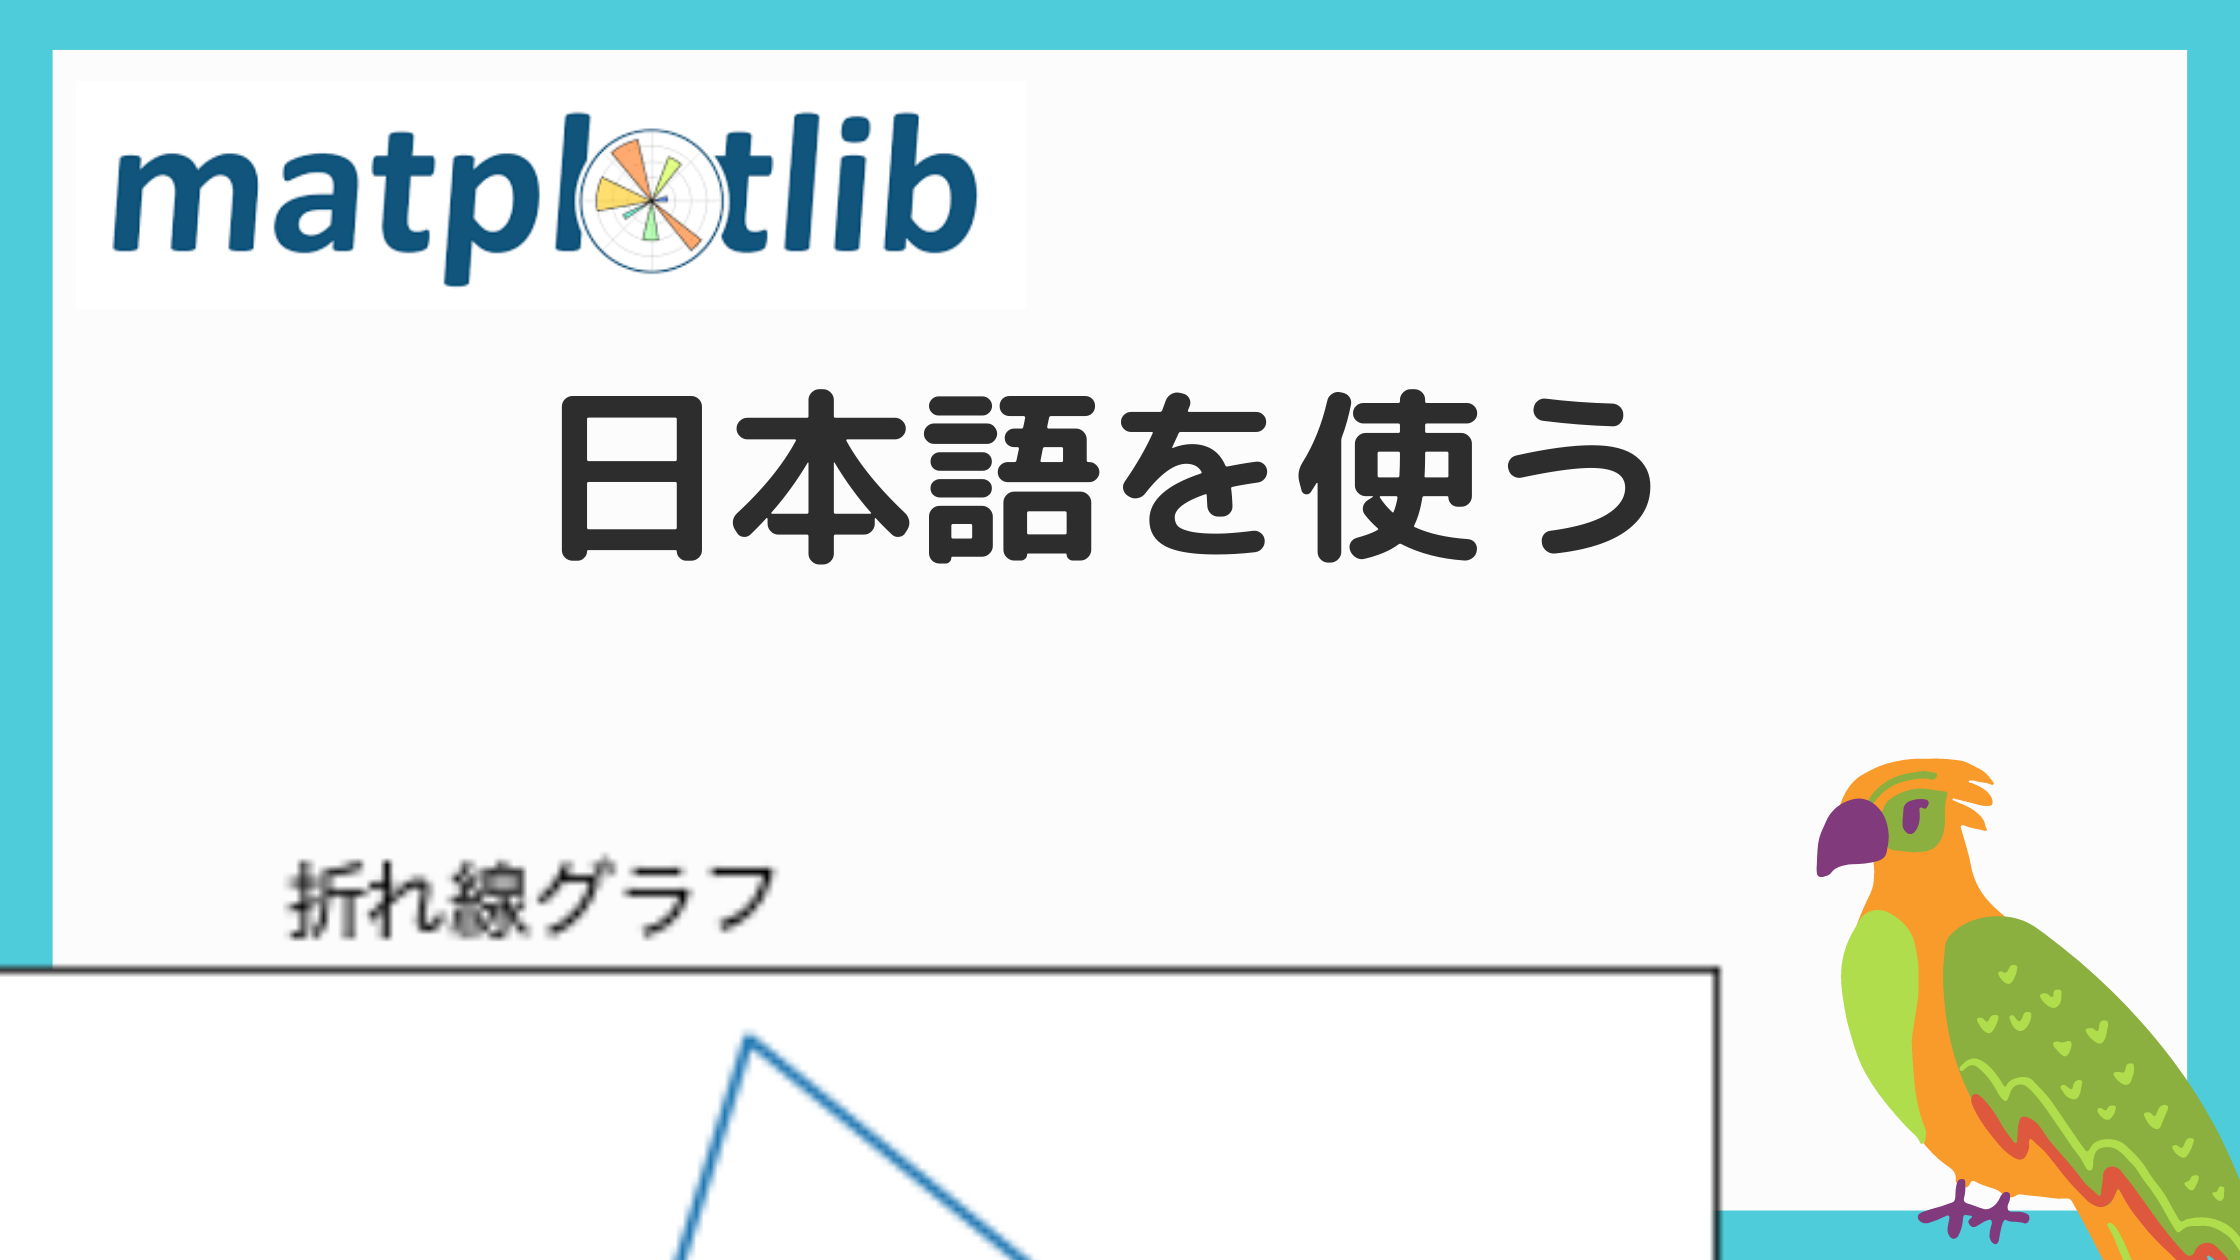 matplotlibの日本語化の記事のアイキャッチ